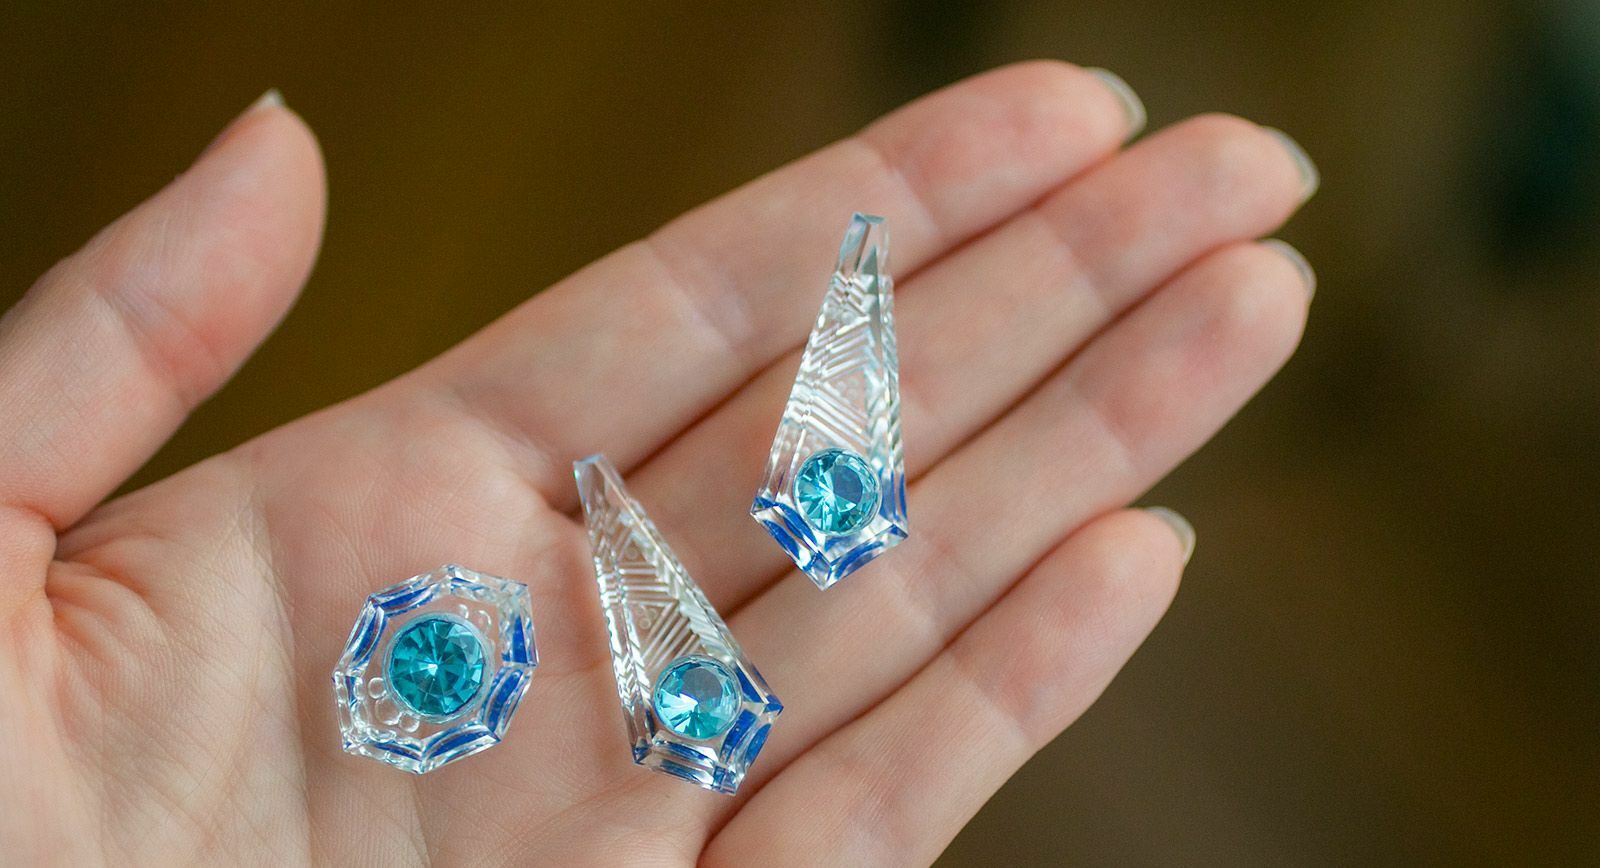 Gemstones cut and polished by Fredh Jhones @fredhjhones - a master gemstone cutter